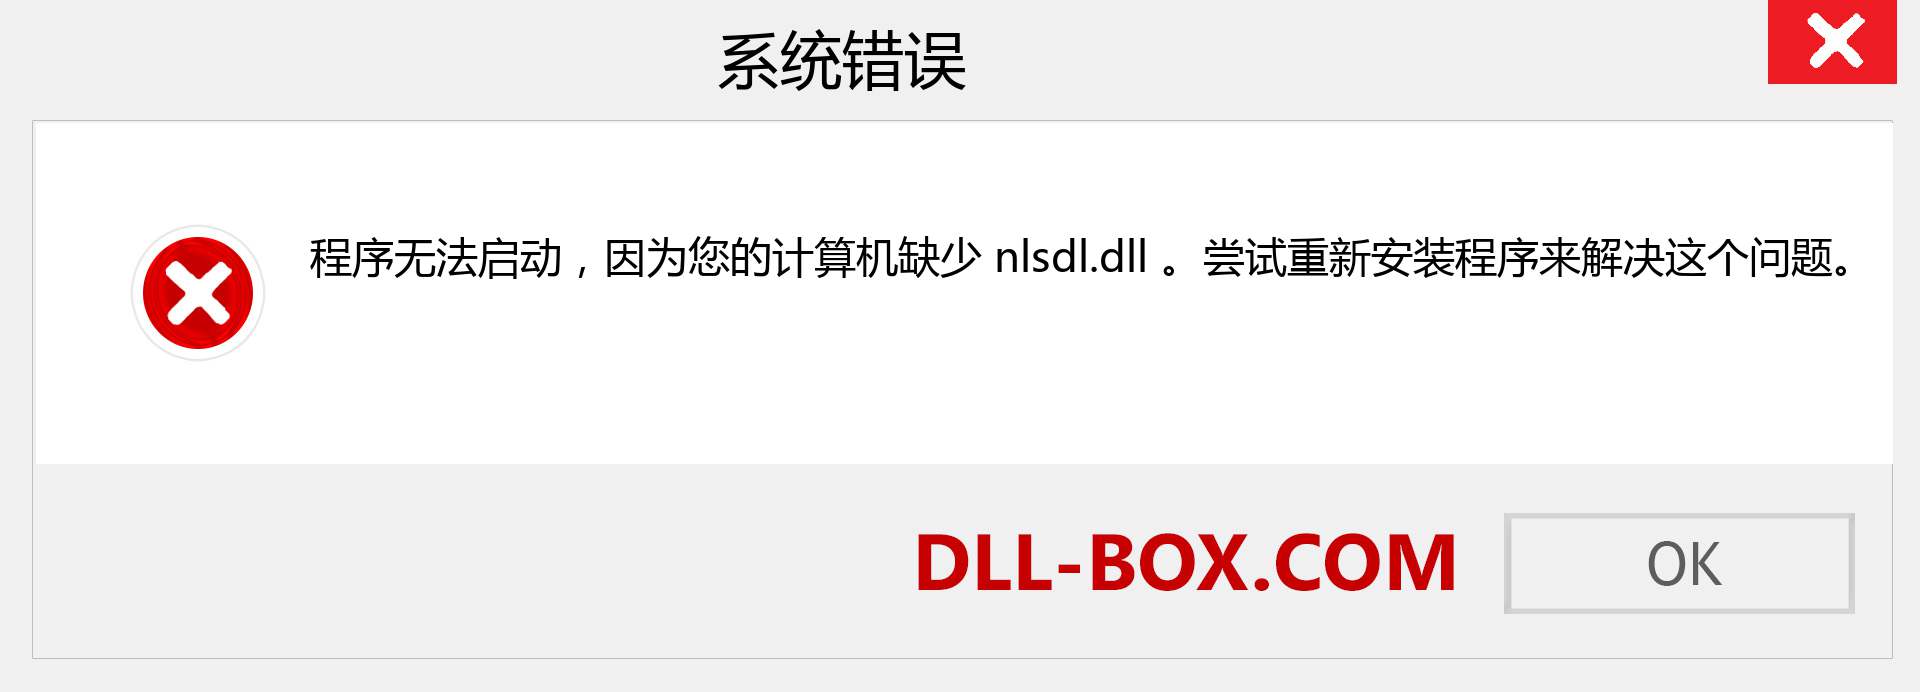 nlsdl.dll 文件丢失？。 适用于 Windows 7、8、10 的下载 - 修复 Windows、照片、图像上的 nlsdl dll 丢失错误